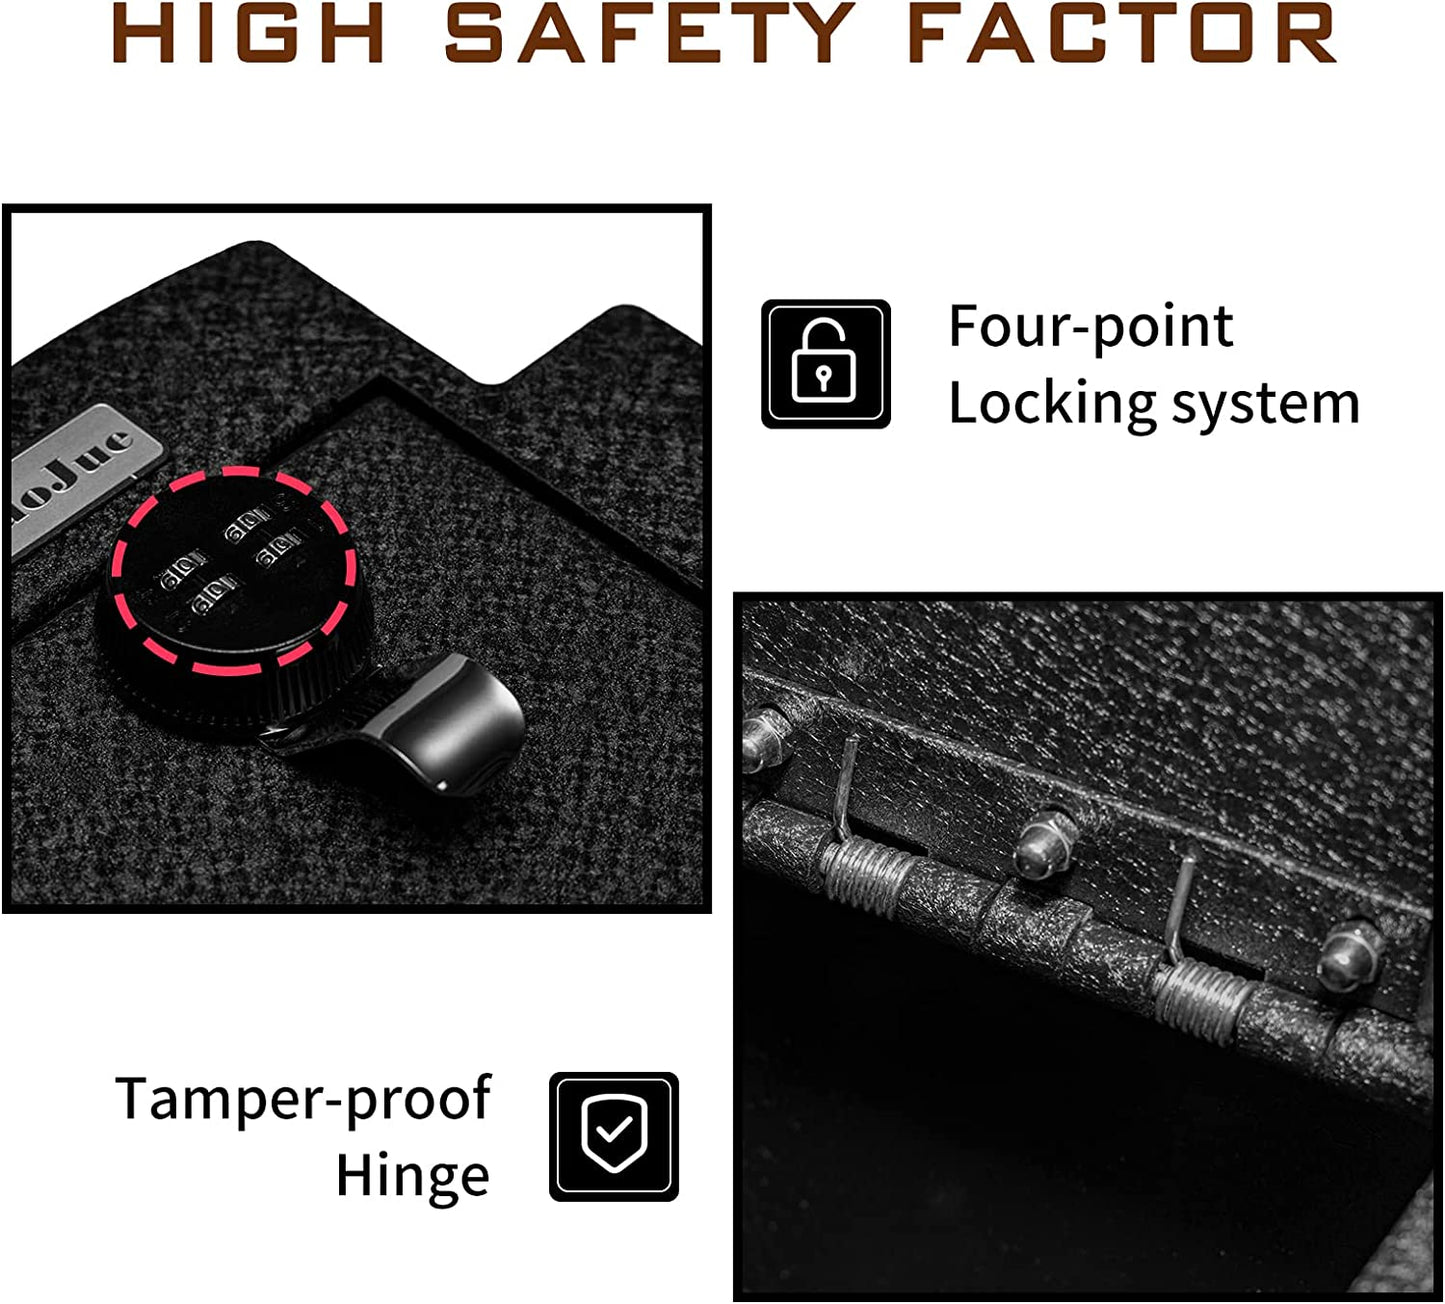 Center Console Safe Gun Safe for 2005-2015 Toyota Tacoma, 4-Digit Combo Lock